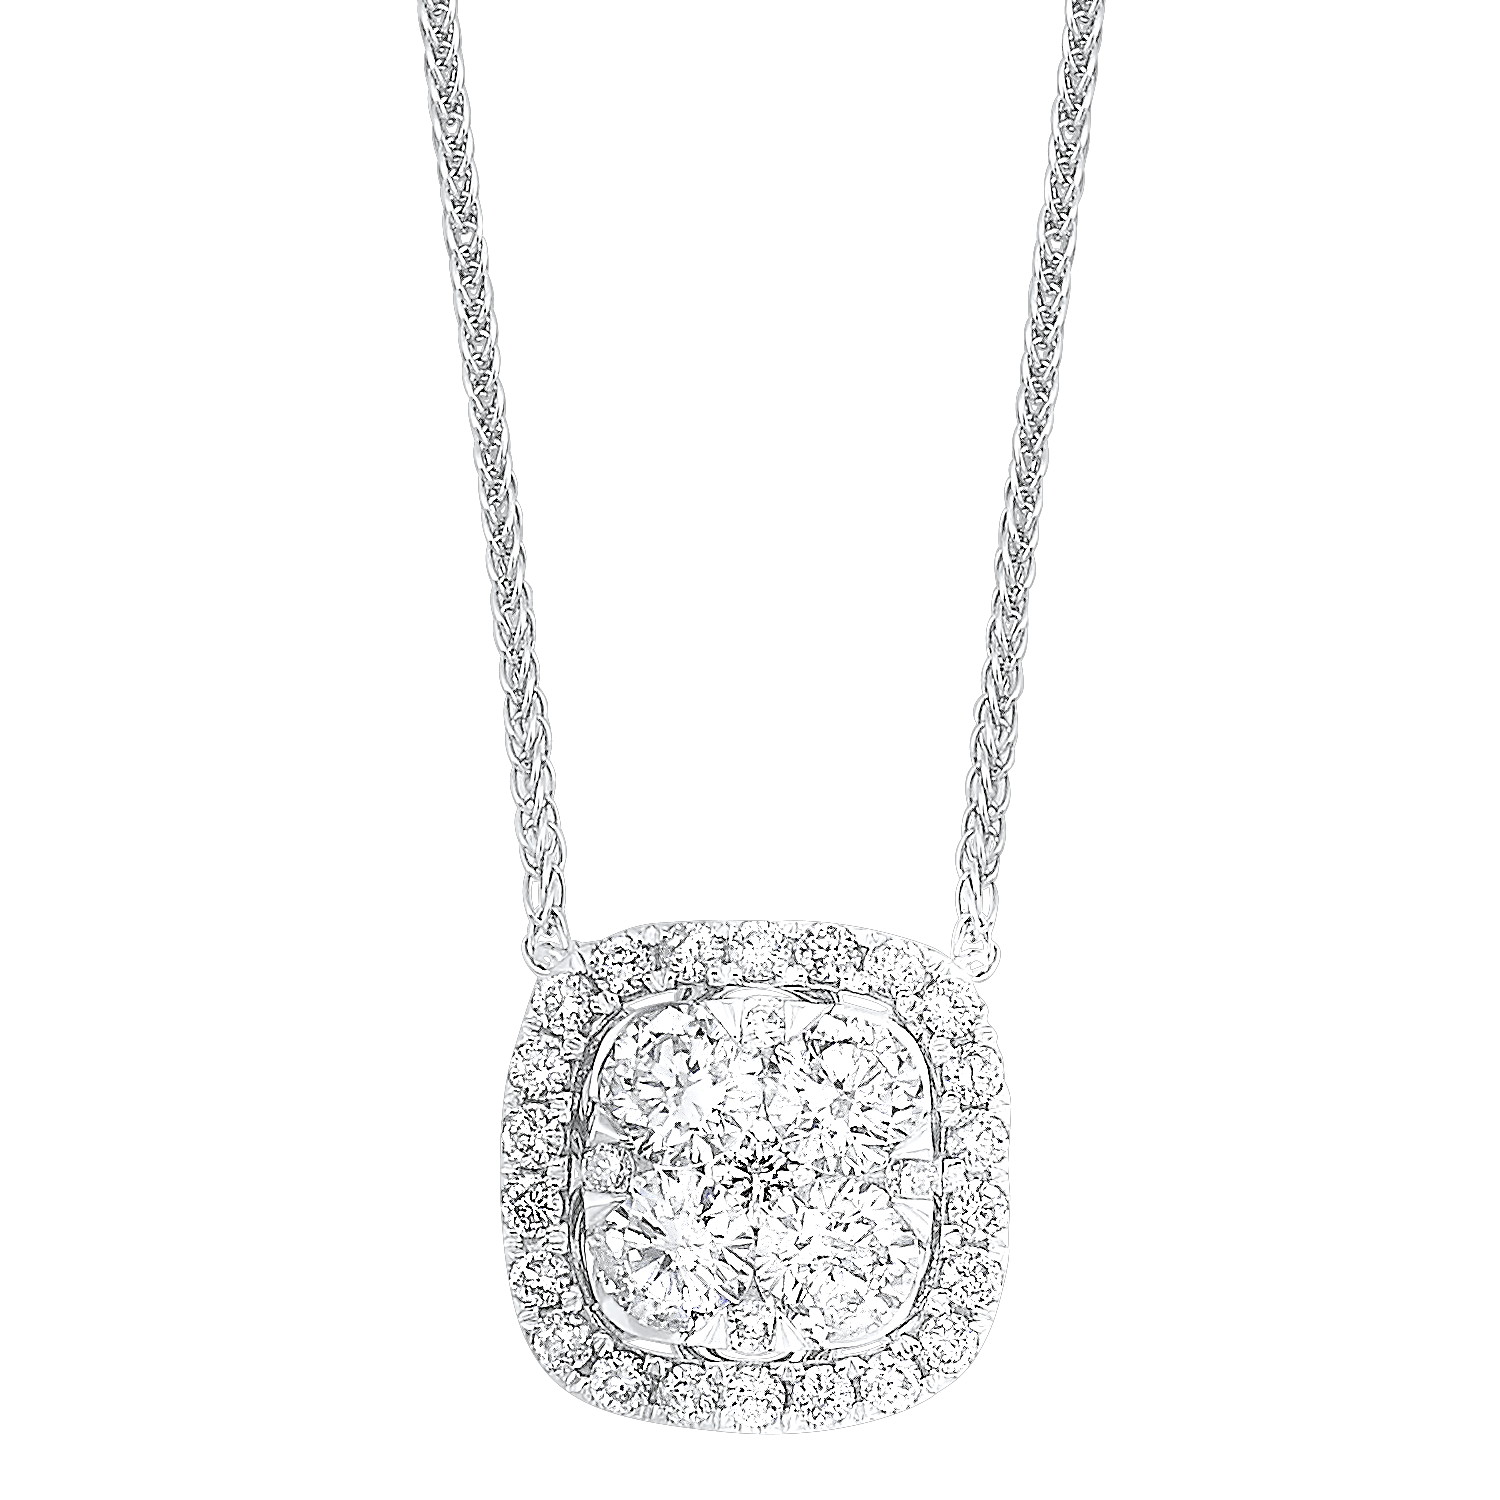 BW James Jewelers Pendant 16 Page Christmas Catalog Offer 14K Diamond Pendant 1/2 ctw